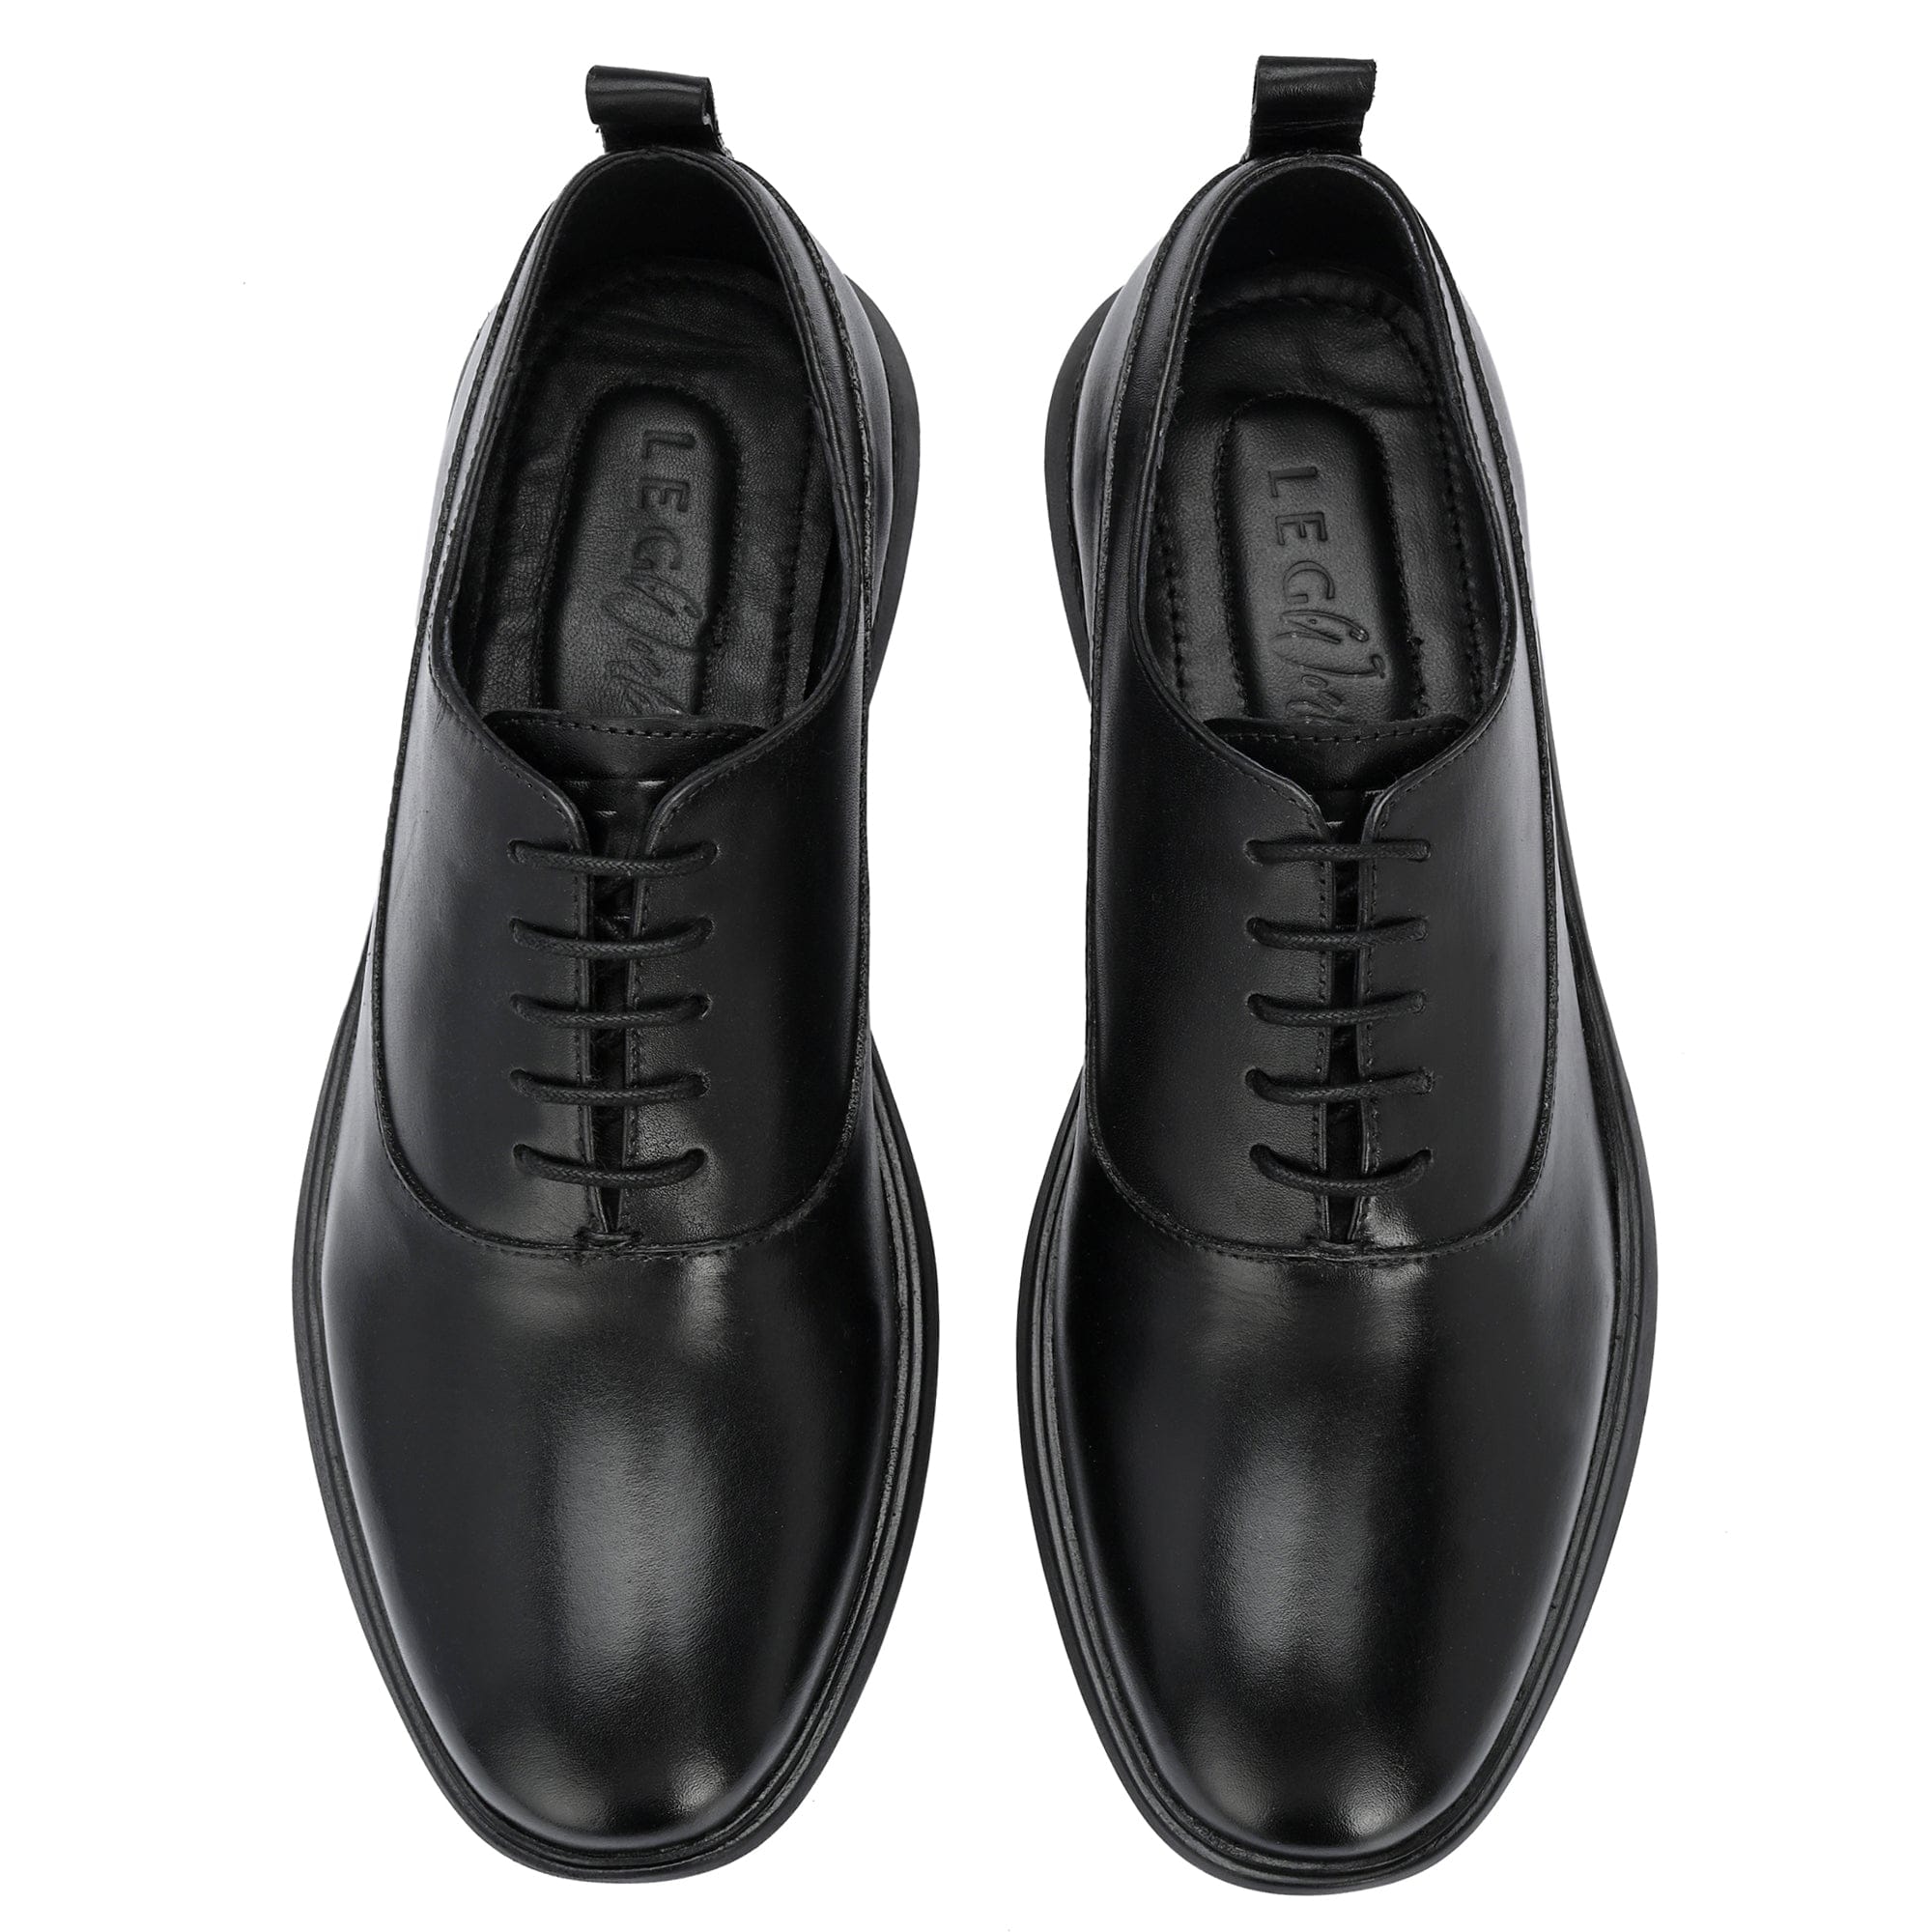 Legwork Crossover Black Italian Leather Shoes